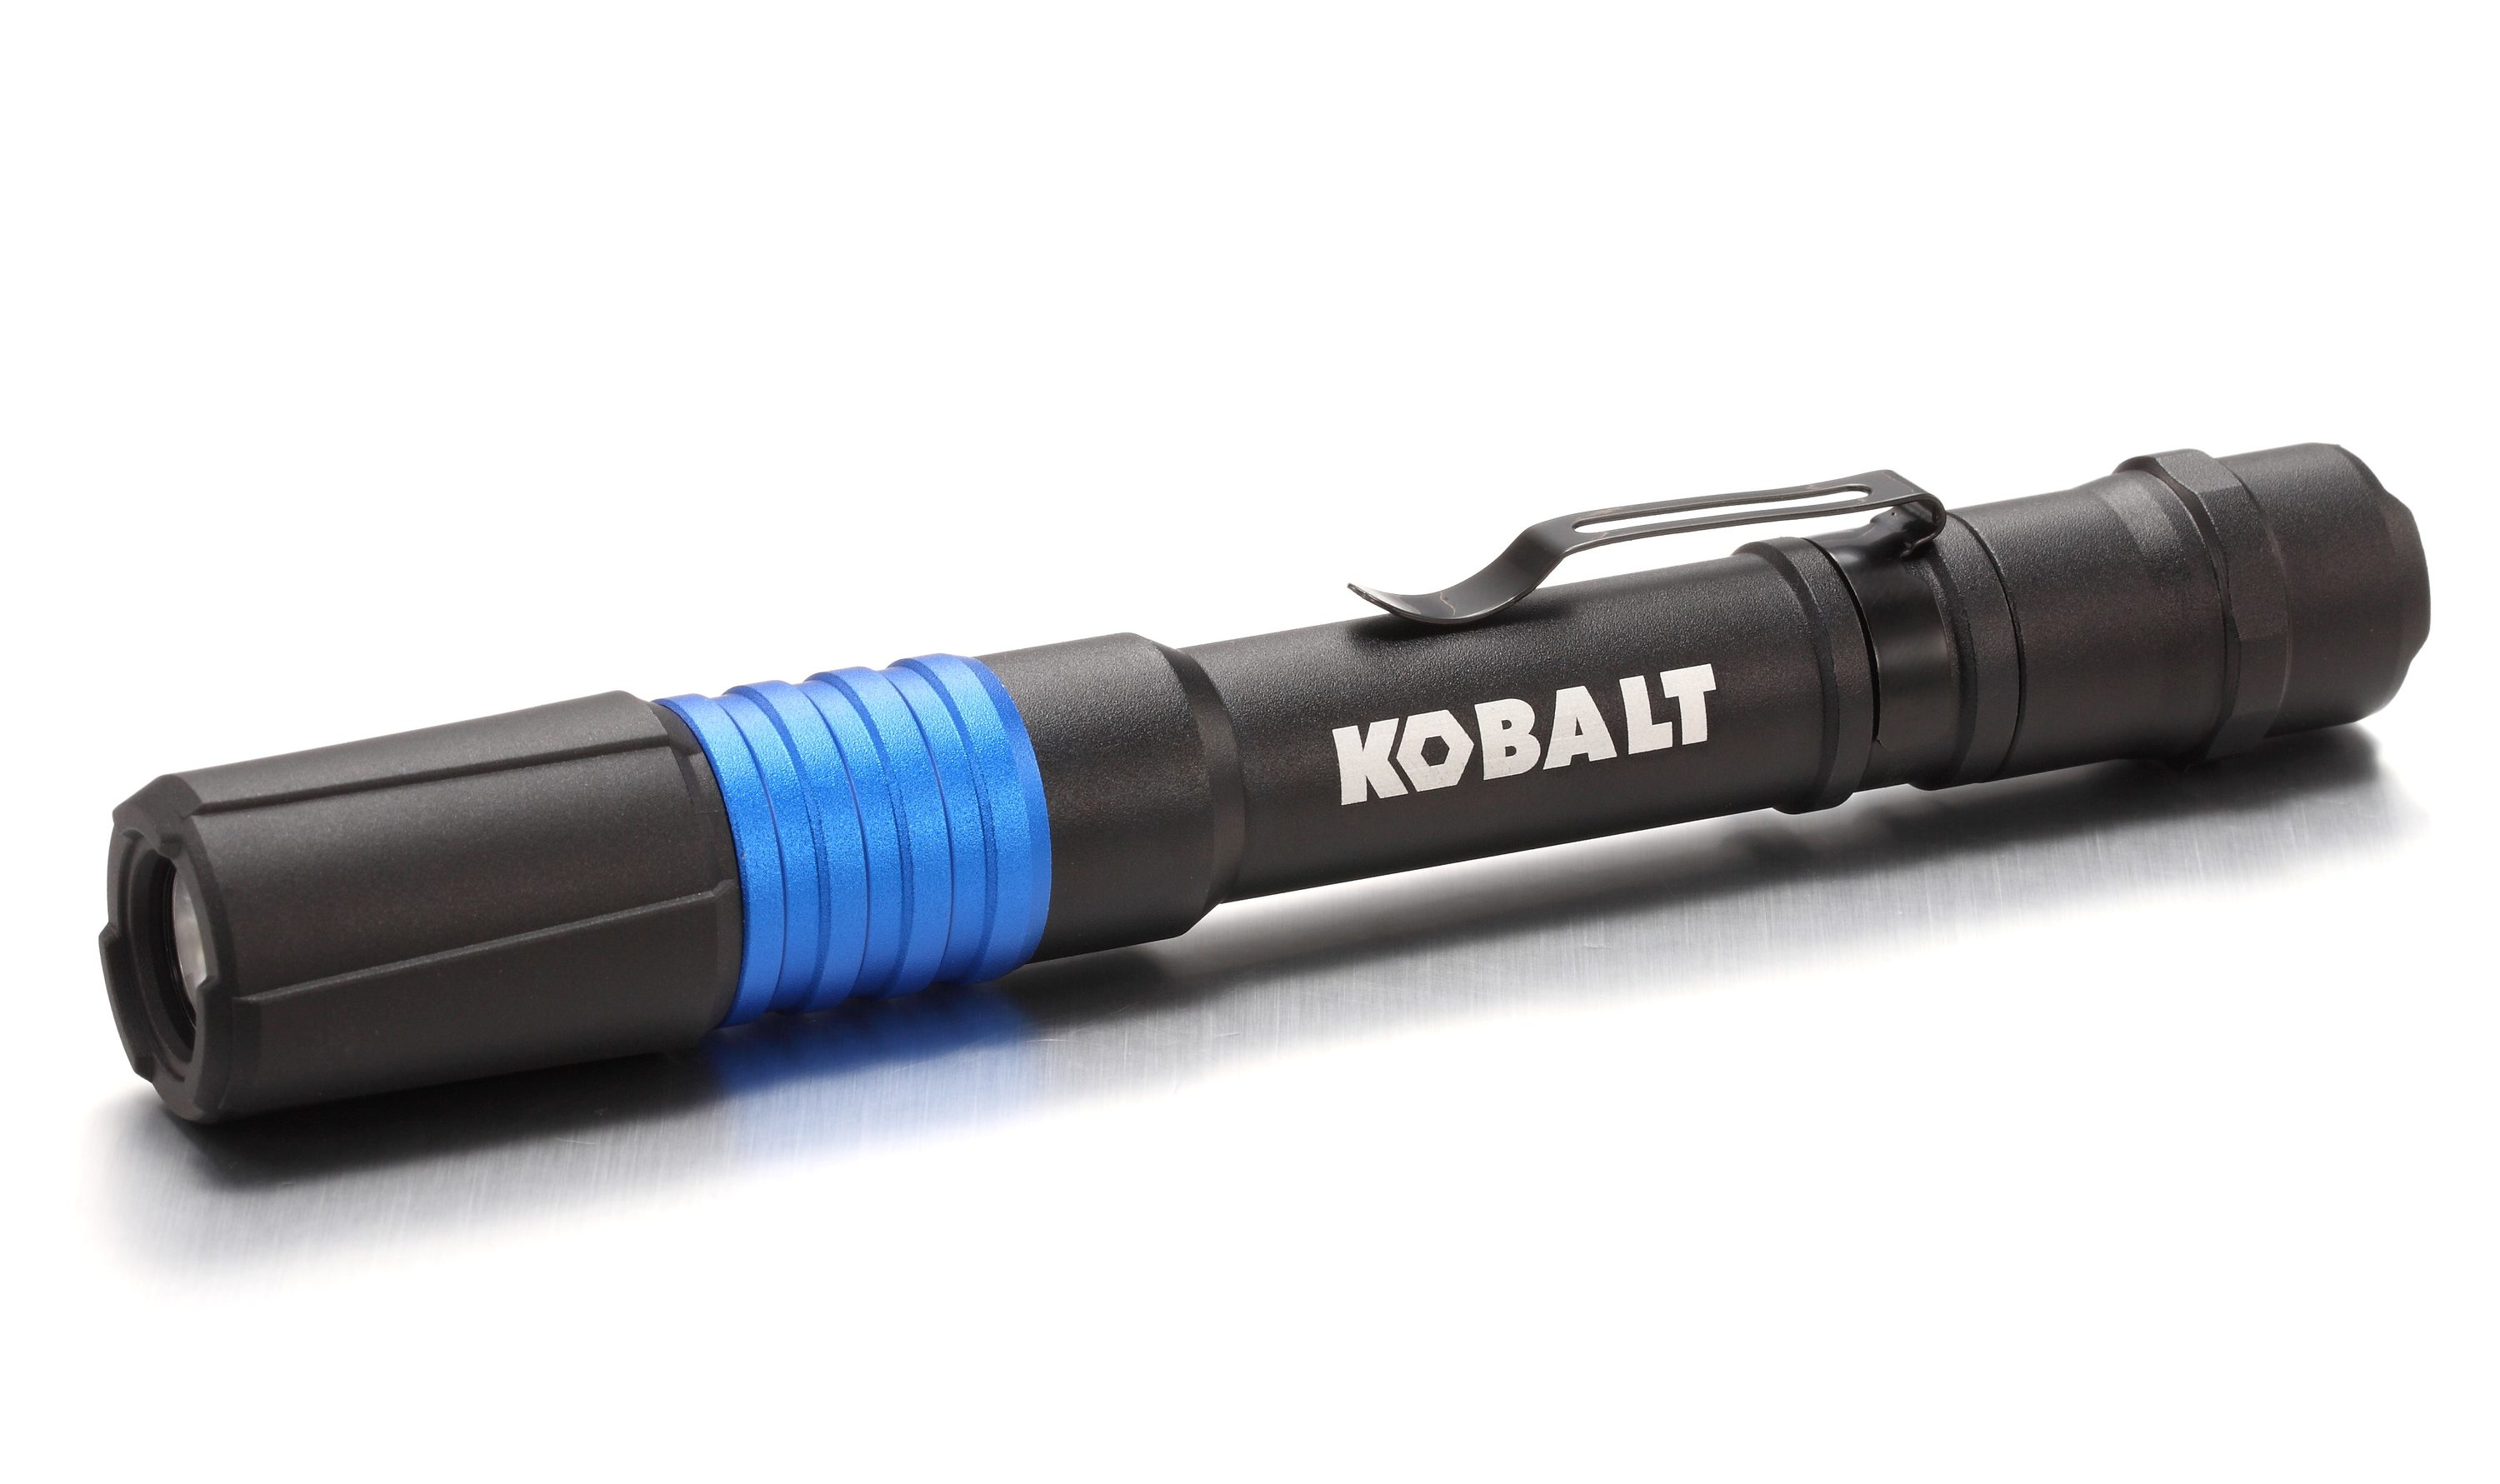 Kobalt 300-Lumen 3 Modes LED Flashlight (AAA Battery Included) in